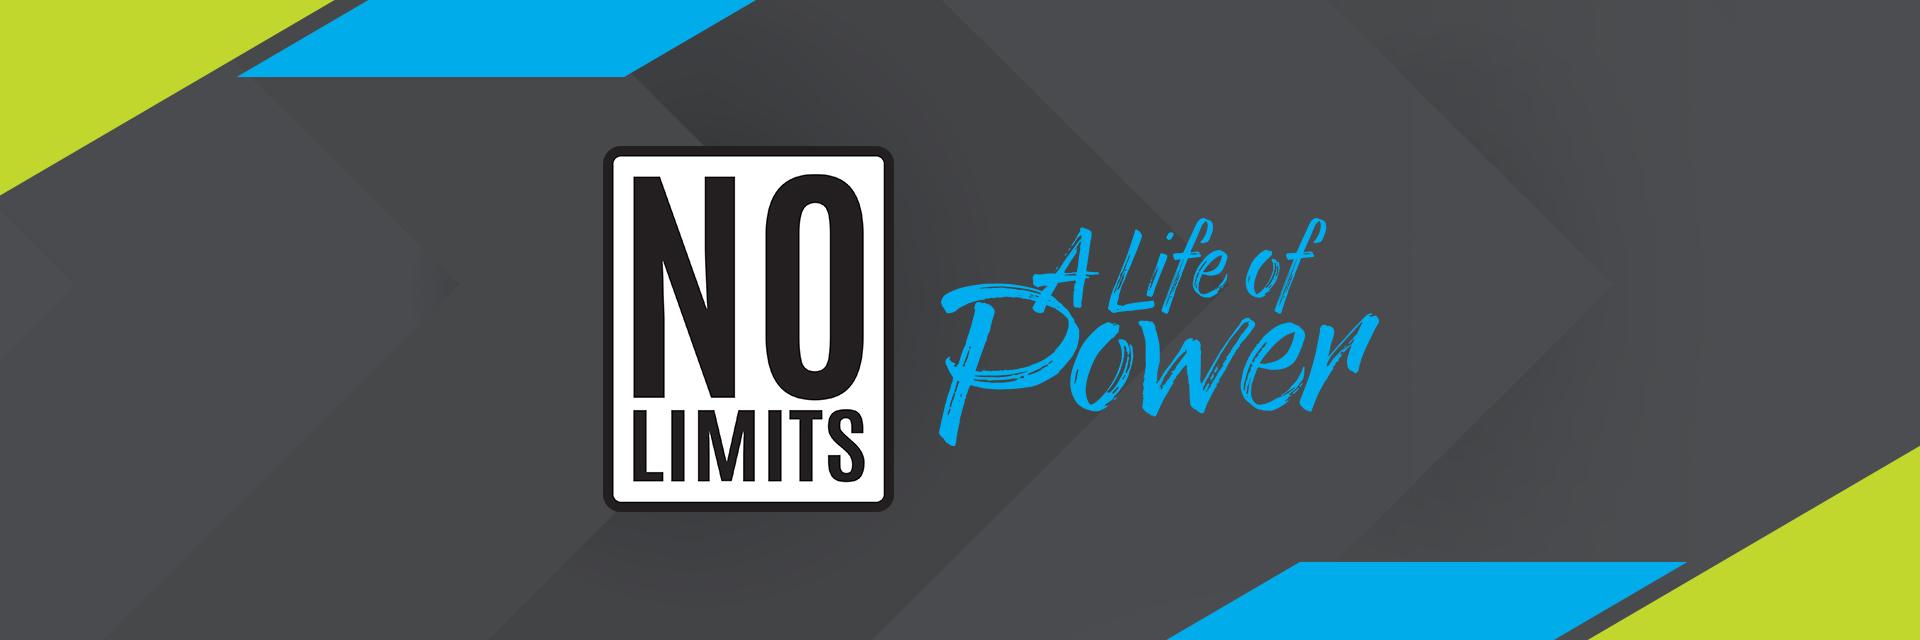 No Limits: A Life of Power image